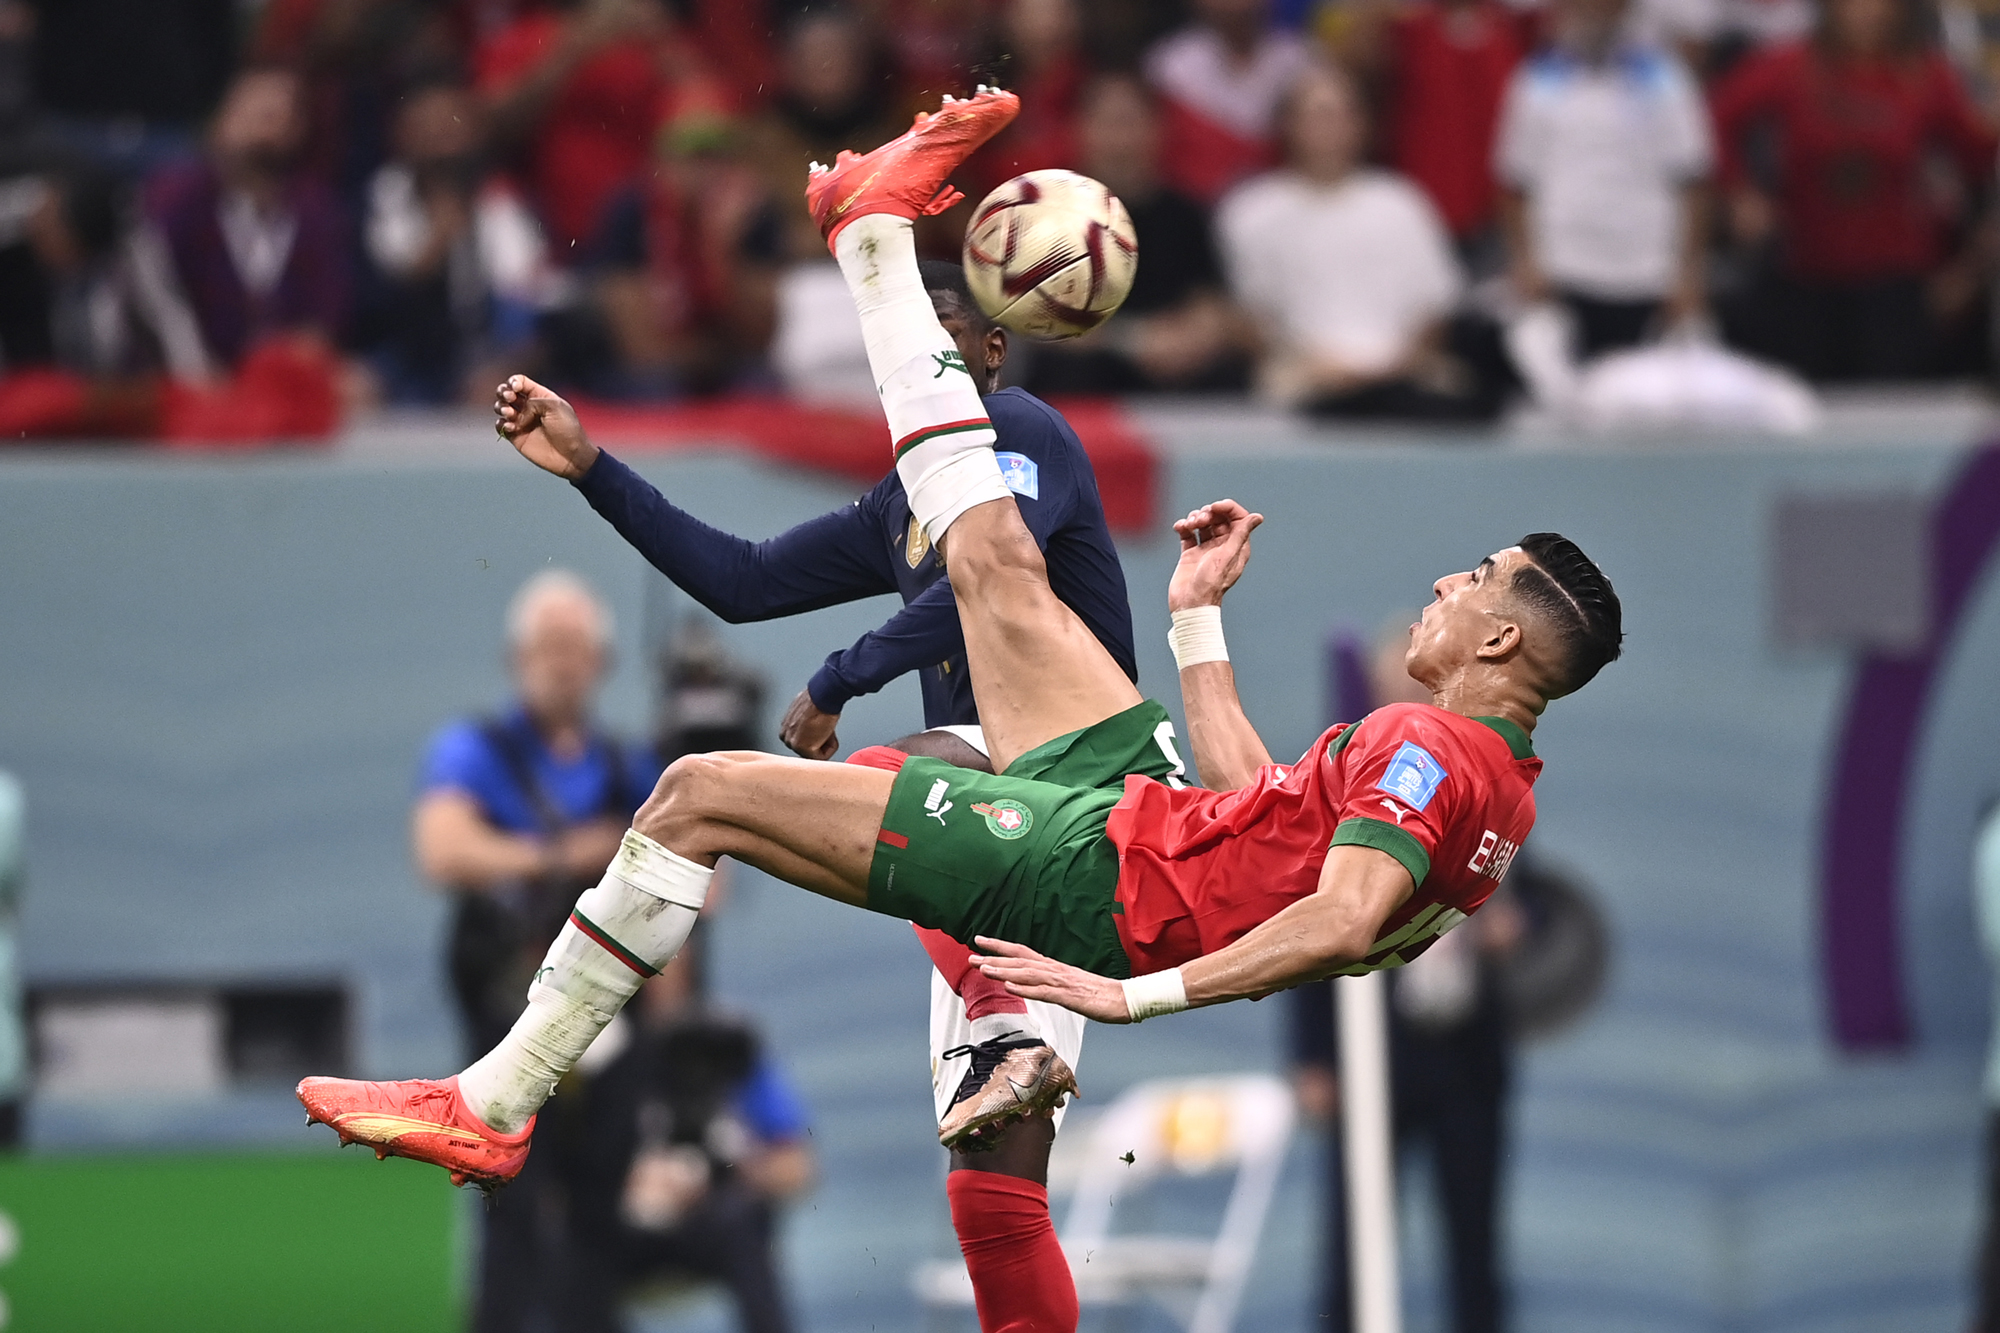 Jawad El Yamiq of Morocco during the match against France at Al-Bayt Stadium in Al Khor, Qatar on Wednesday.